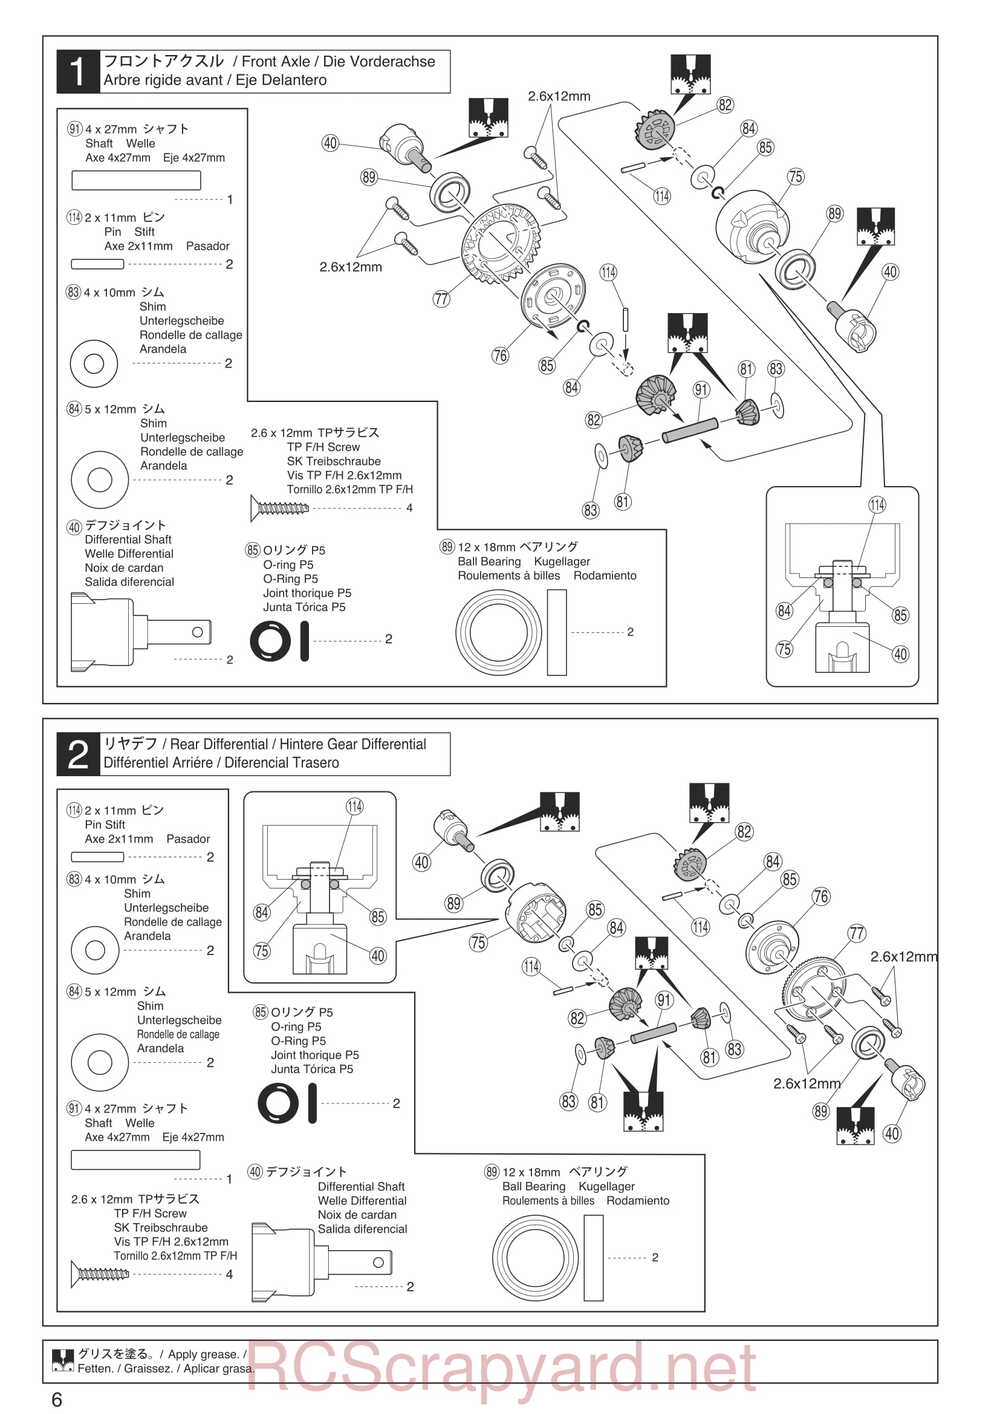 Kyosho - 30912 - EP Fazer Rally - Manual - Page 06